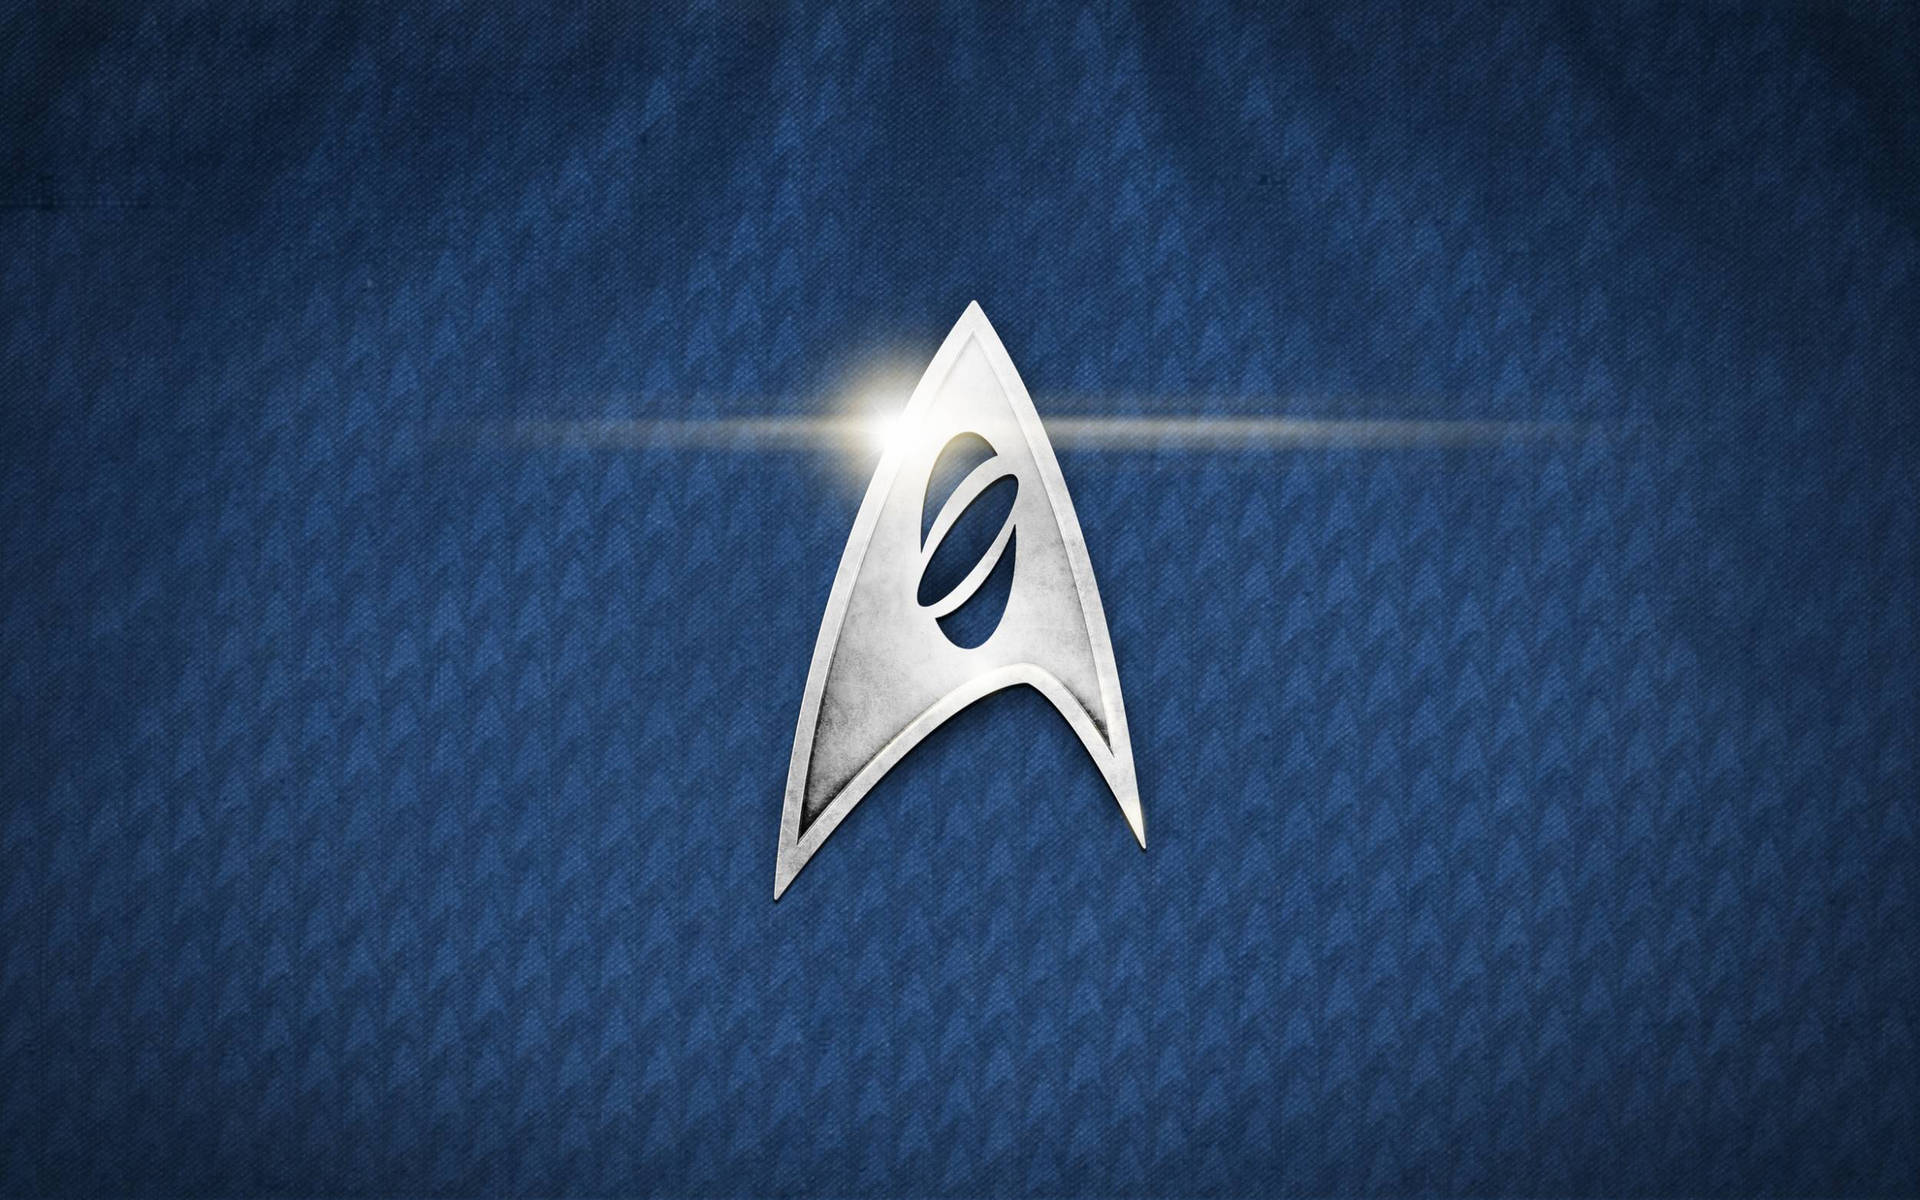 Nice and elegant wallpaper of Star Trek logo. 